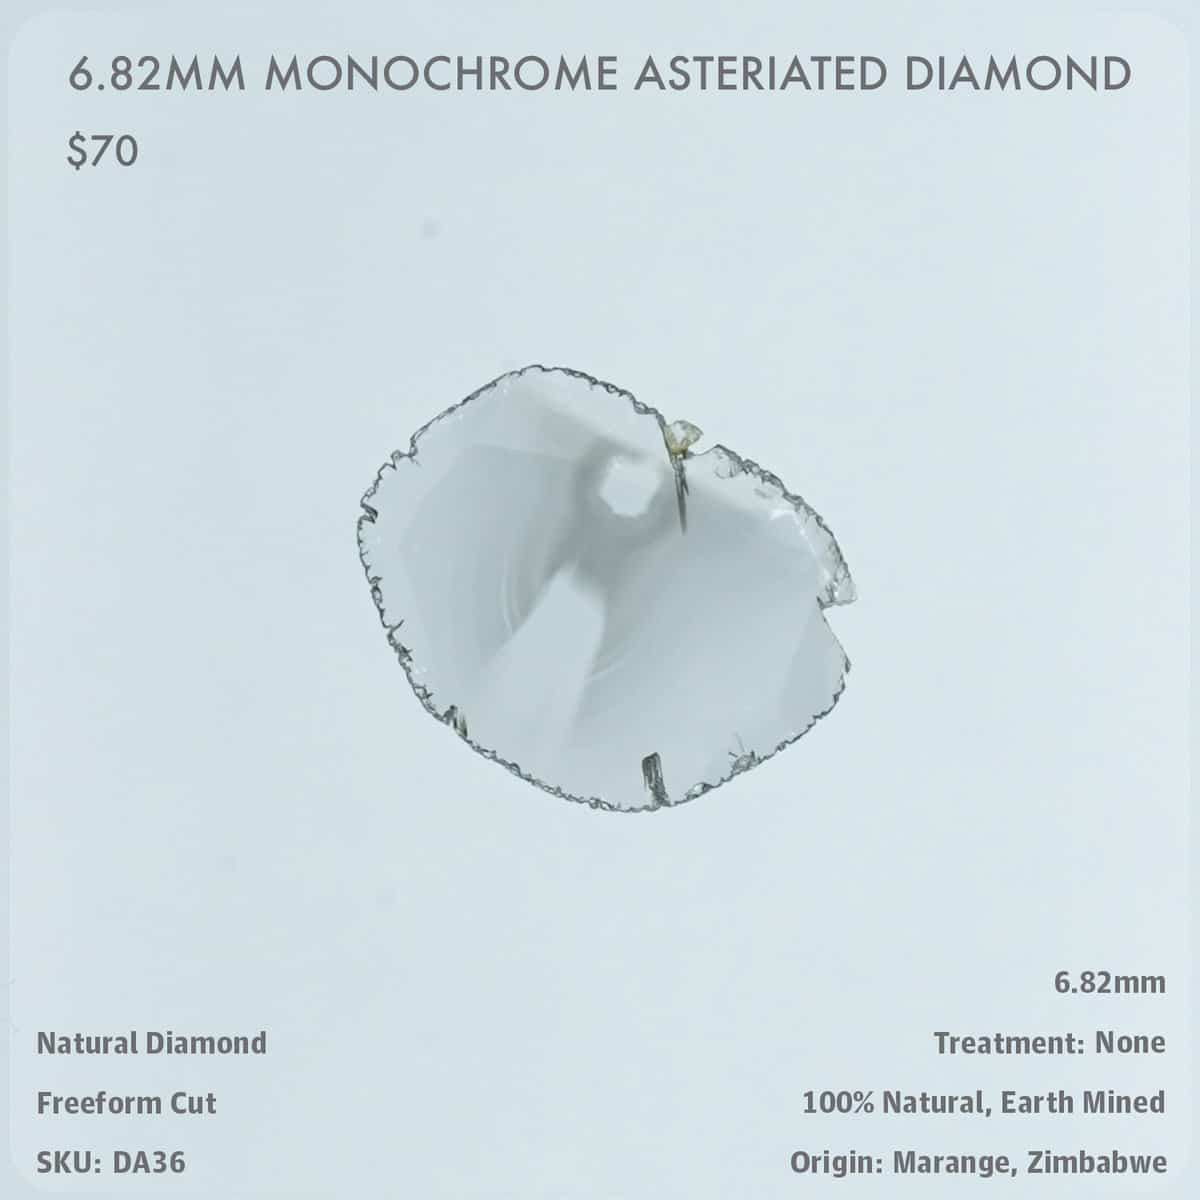 6.82mm Monochrome Asteriated Diamond